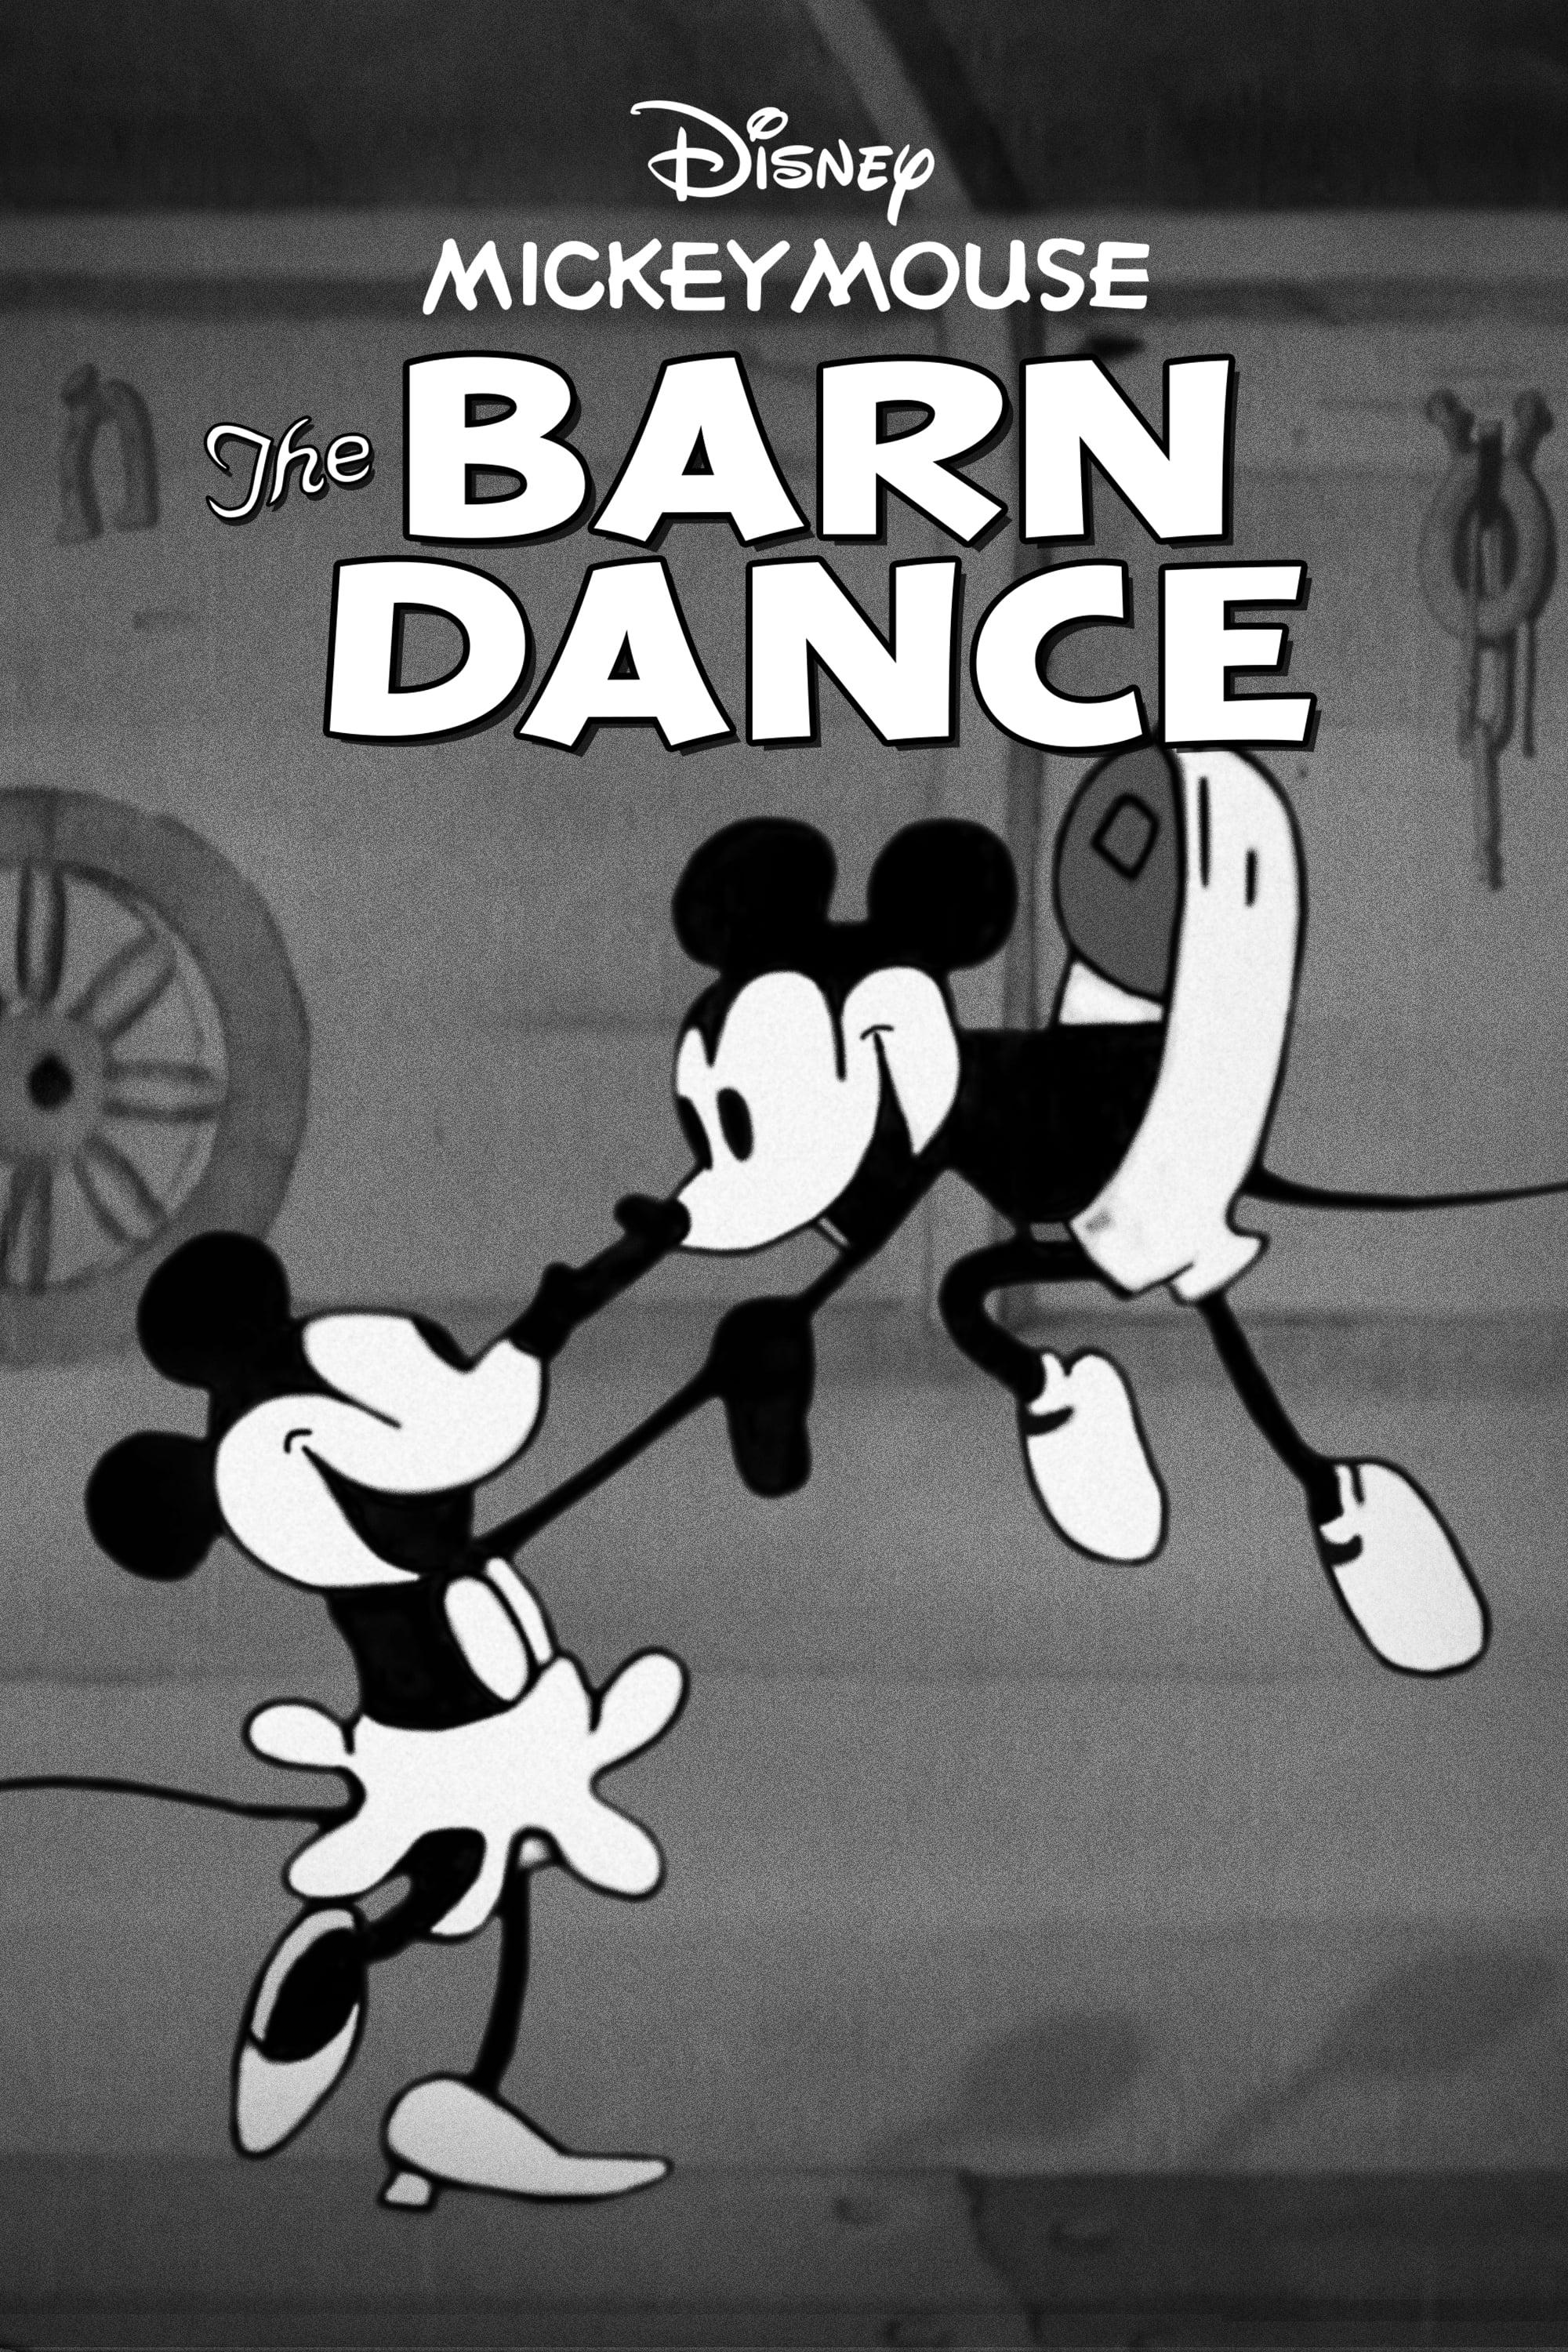 The Barn Dance poster